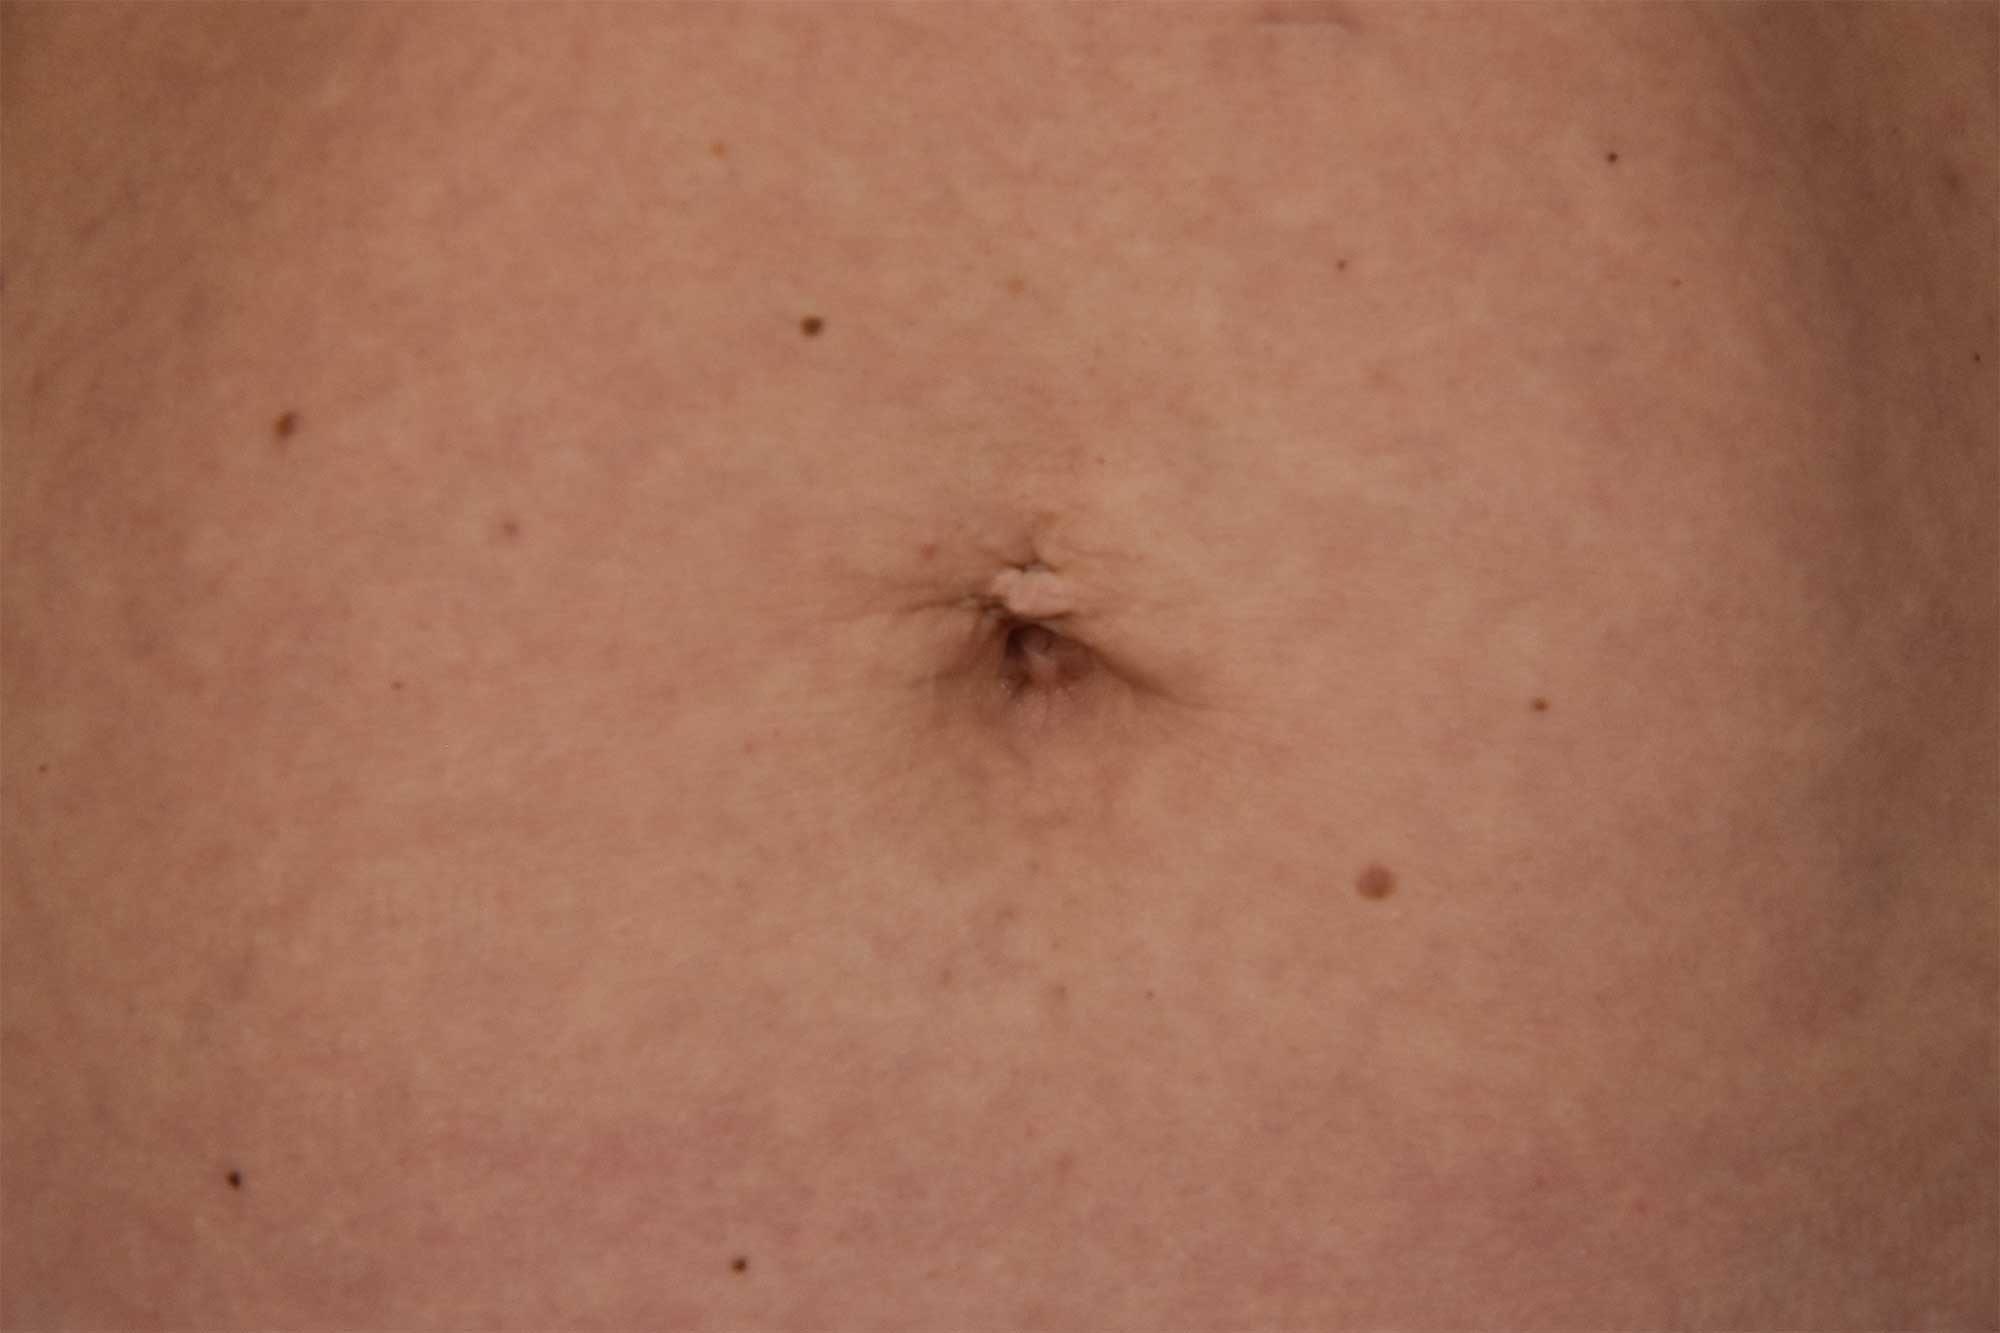 navel piercing scar removal